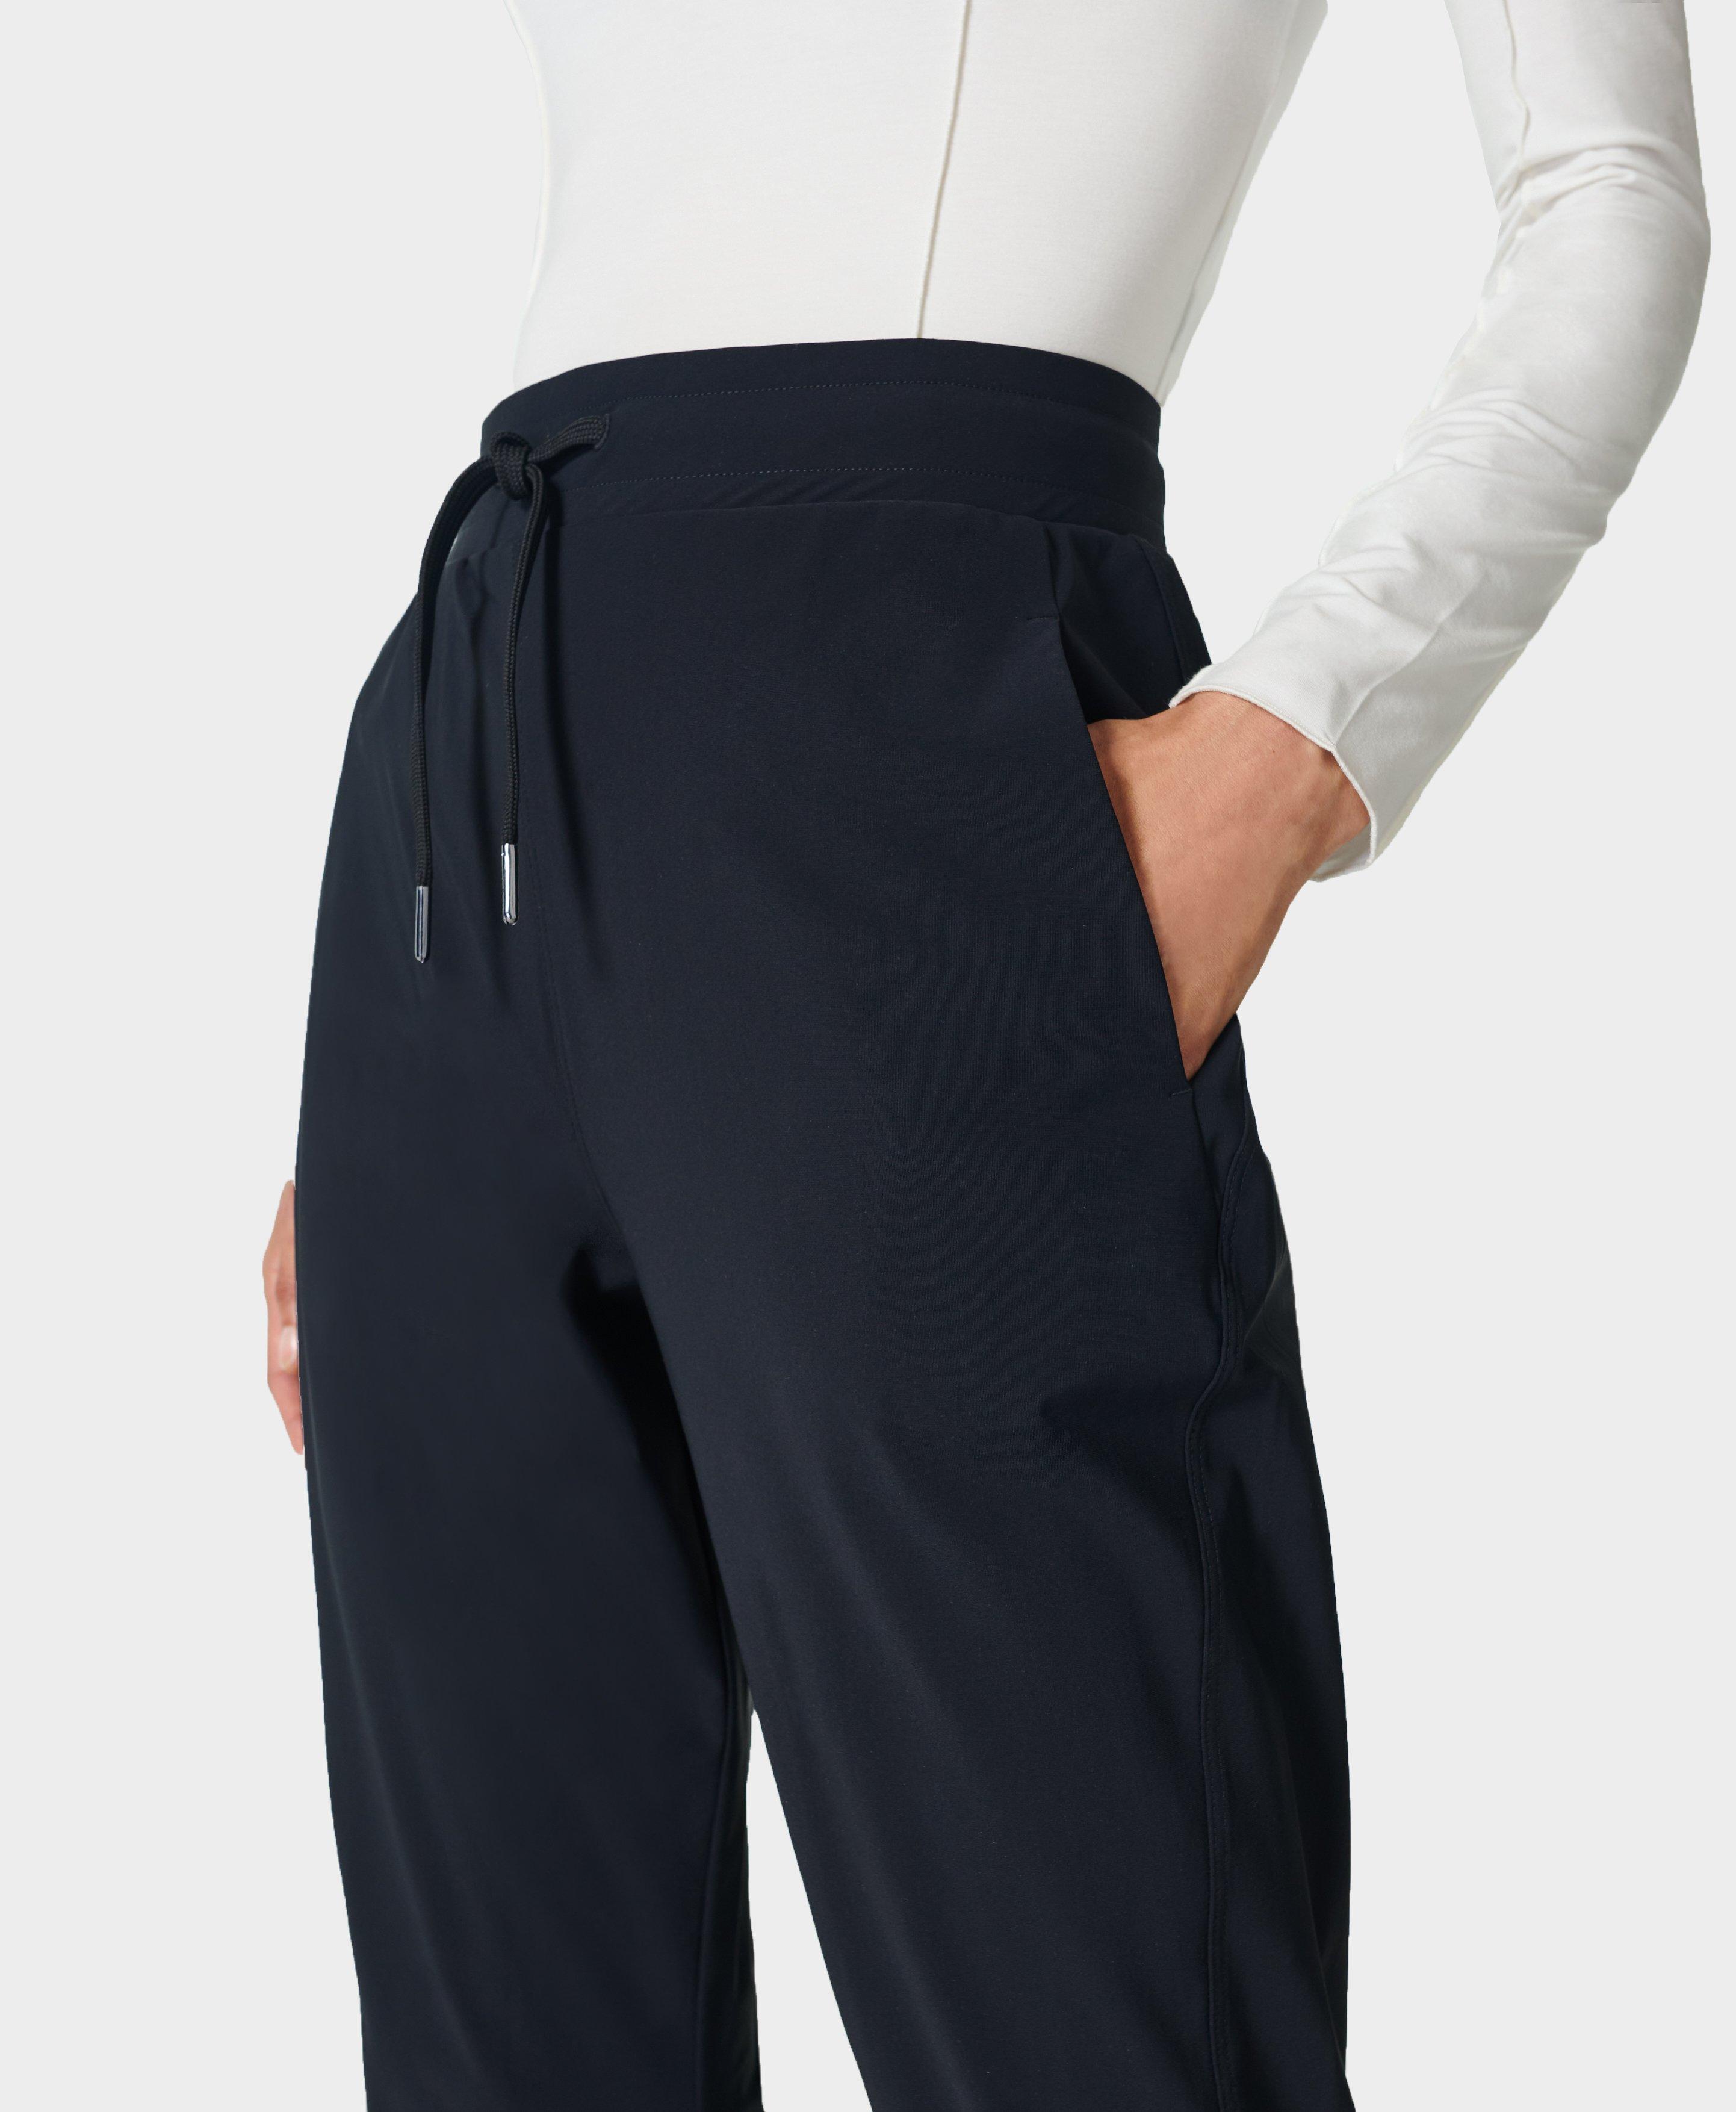 Winter Explorer Trouser - Black, Women's Trousers & Yoga Pants